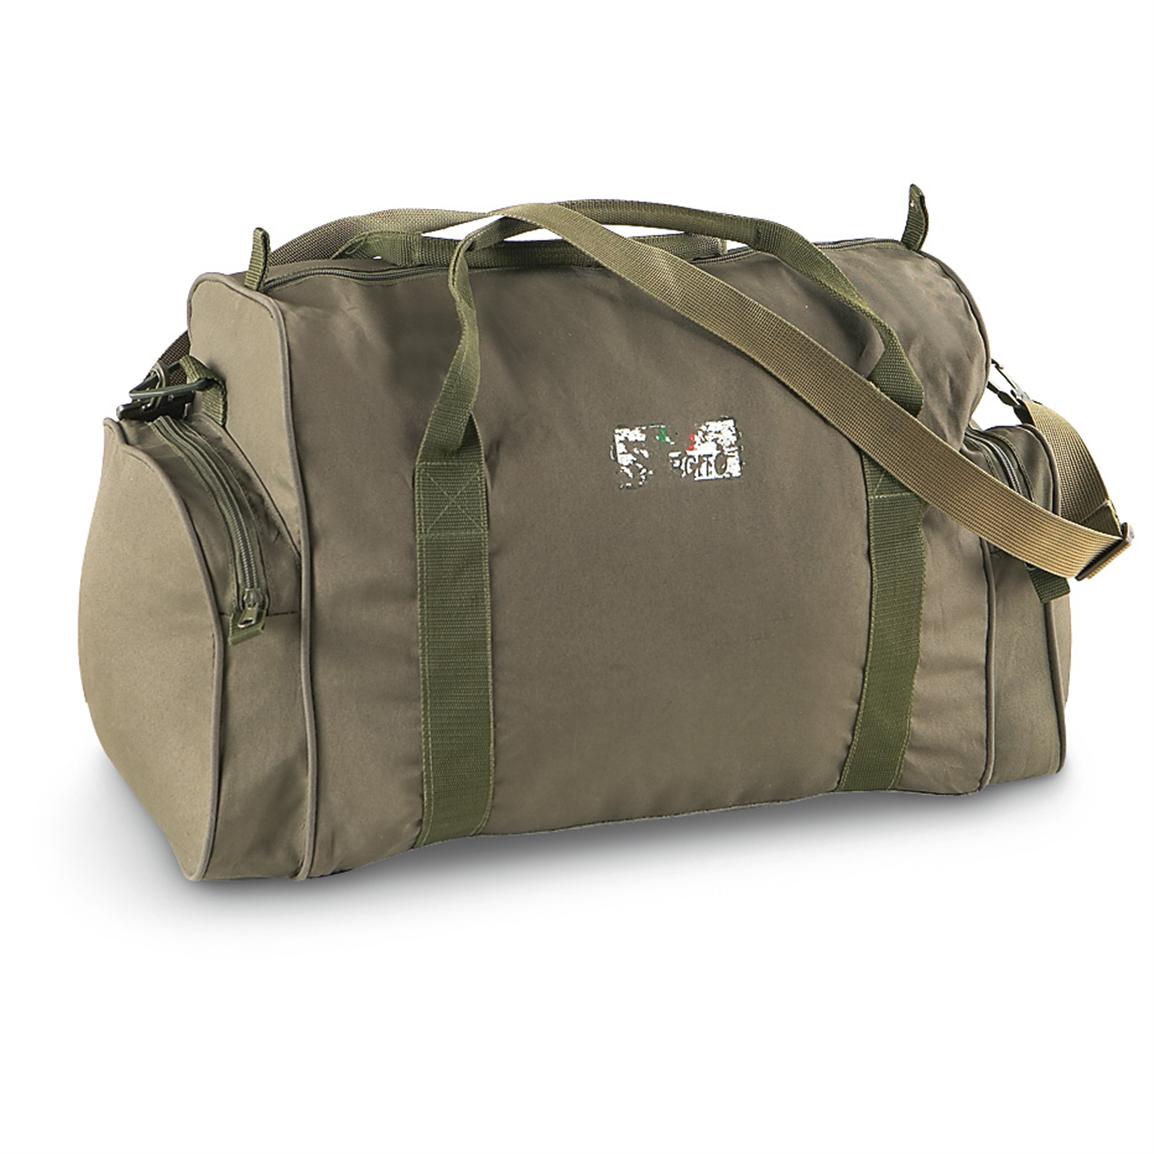 Used Italian Military Duffel Bag, Olive Drab - 156865, Duffle Bags at Sportsman&#39;s Guide